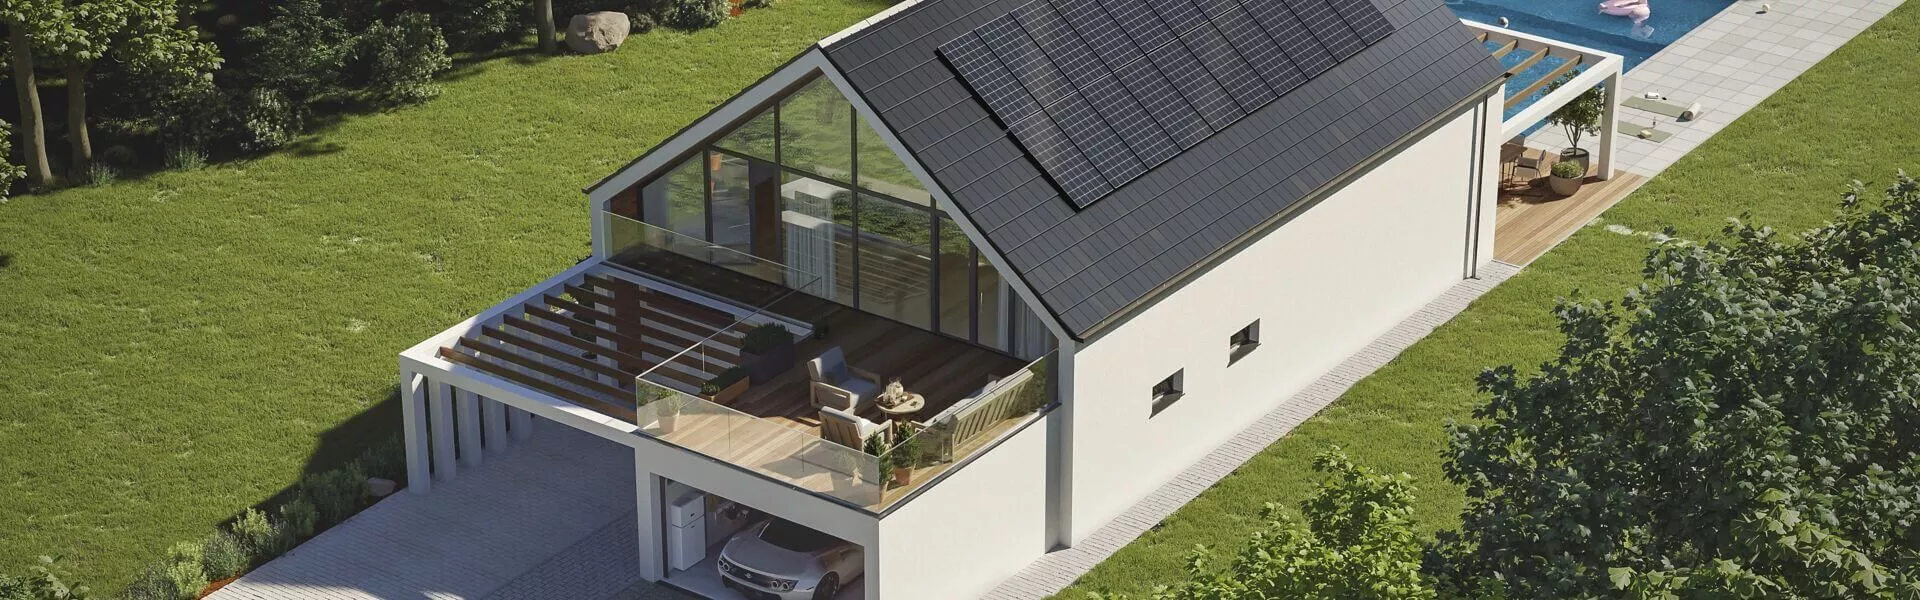 Paneles fotovoltaicos residenciales -  Ecosistema SunPower ONE 